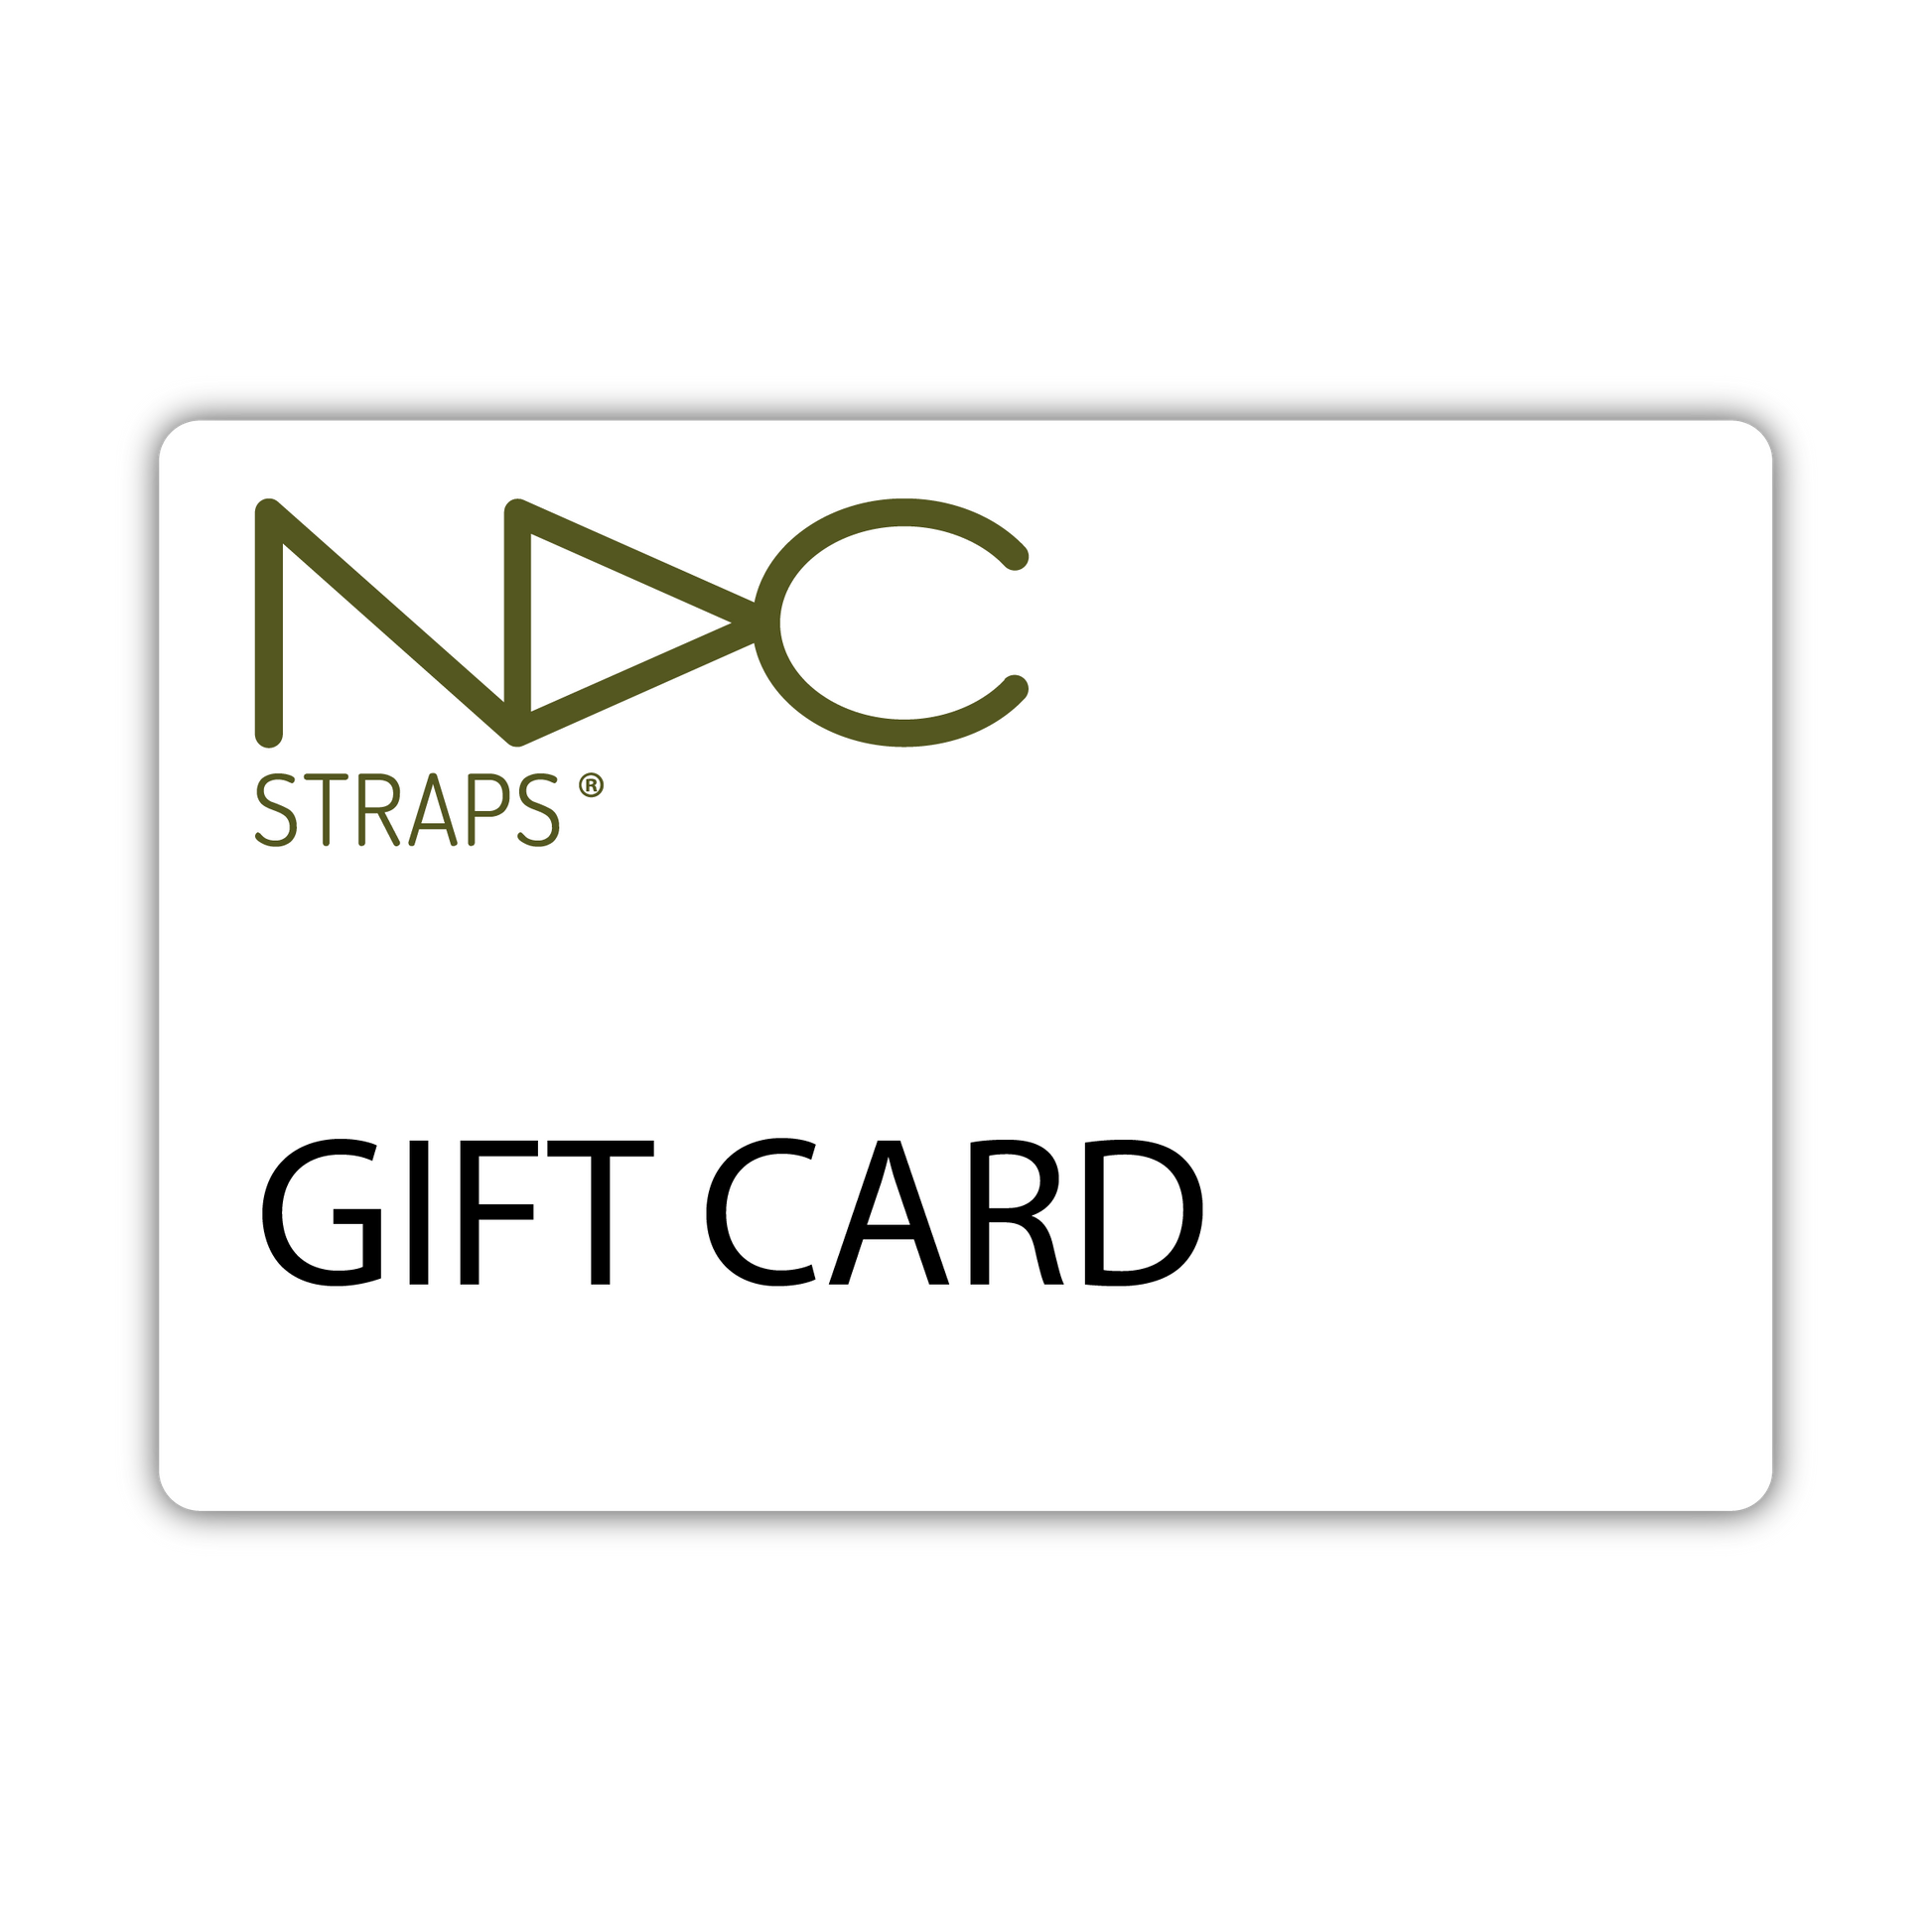 NDC Straps Gift Card - NDC Straps